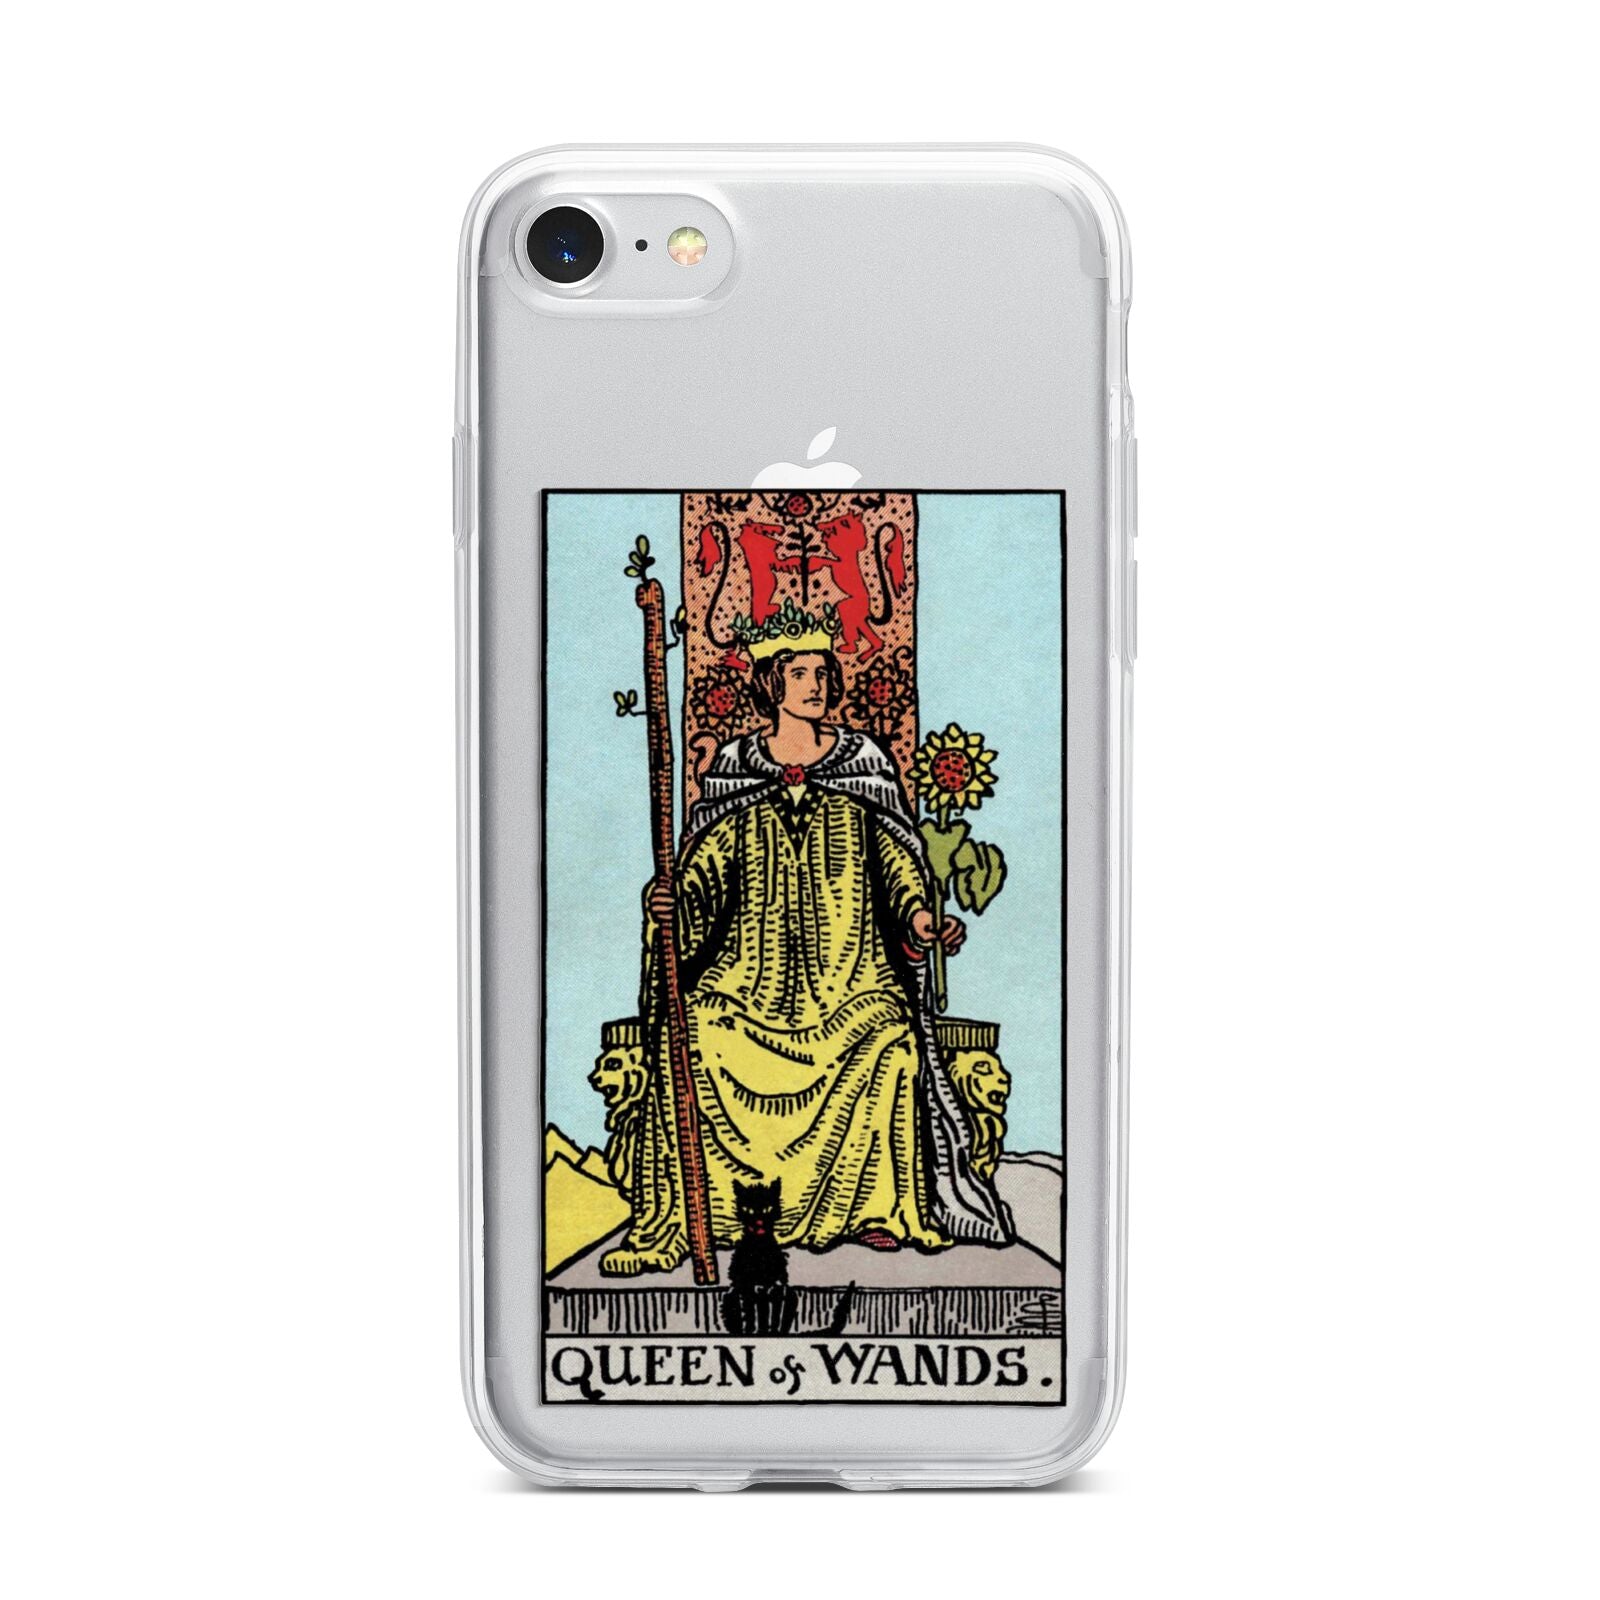 Queen of Wands Tarot Card iPhone 7 Bumper Case on Silver iPhone